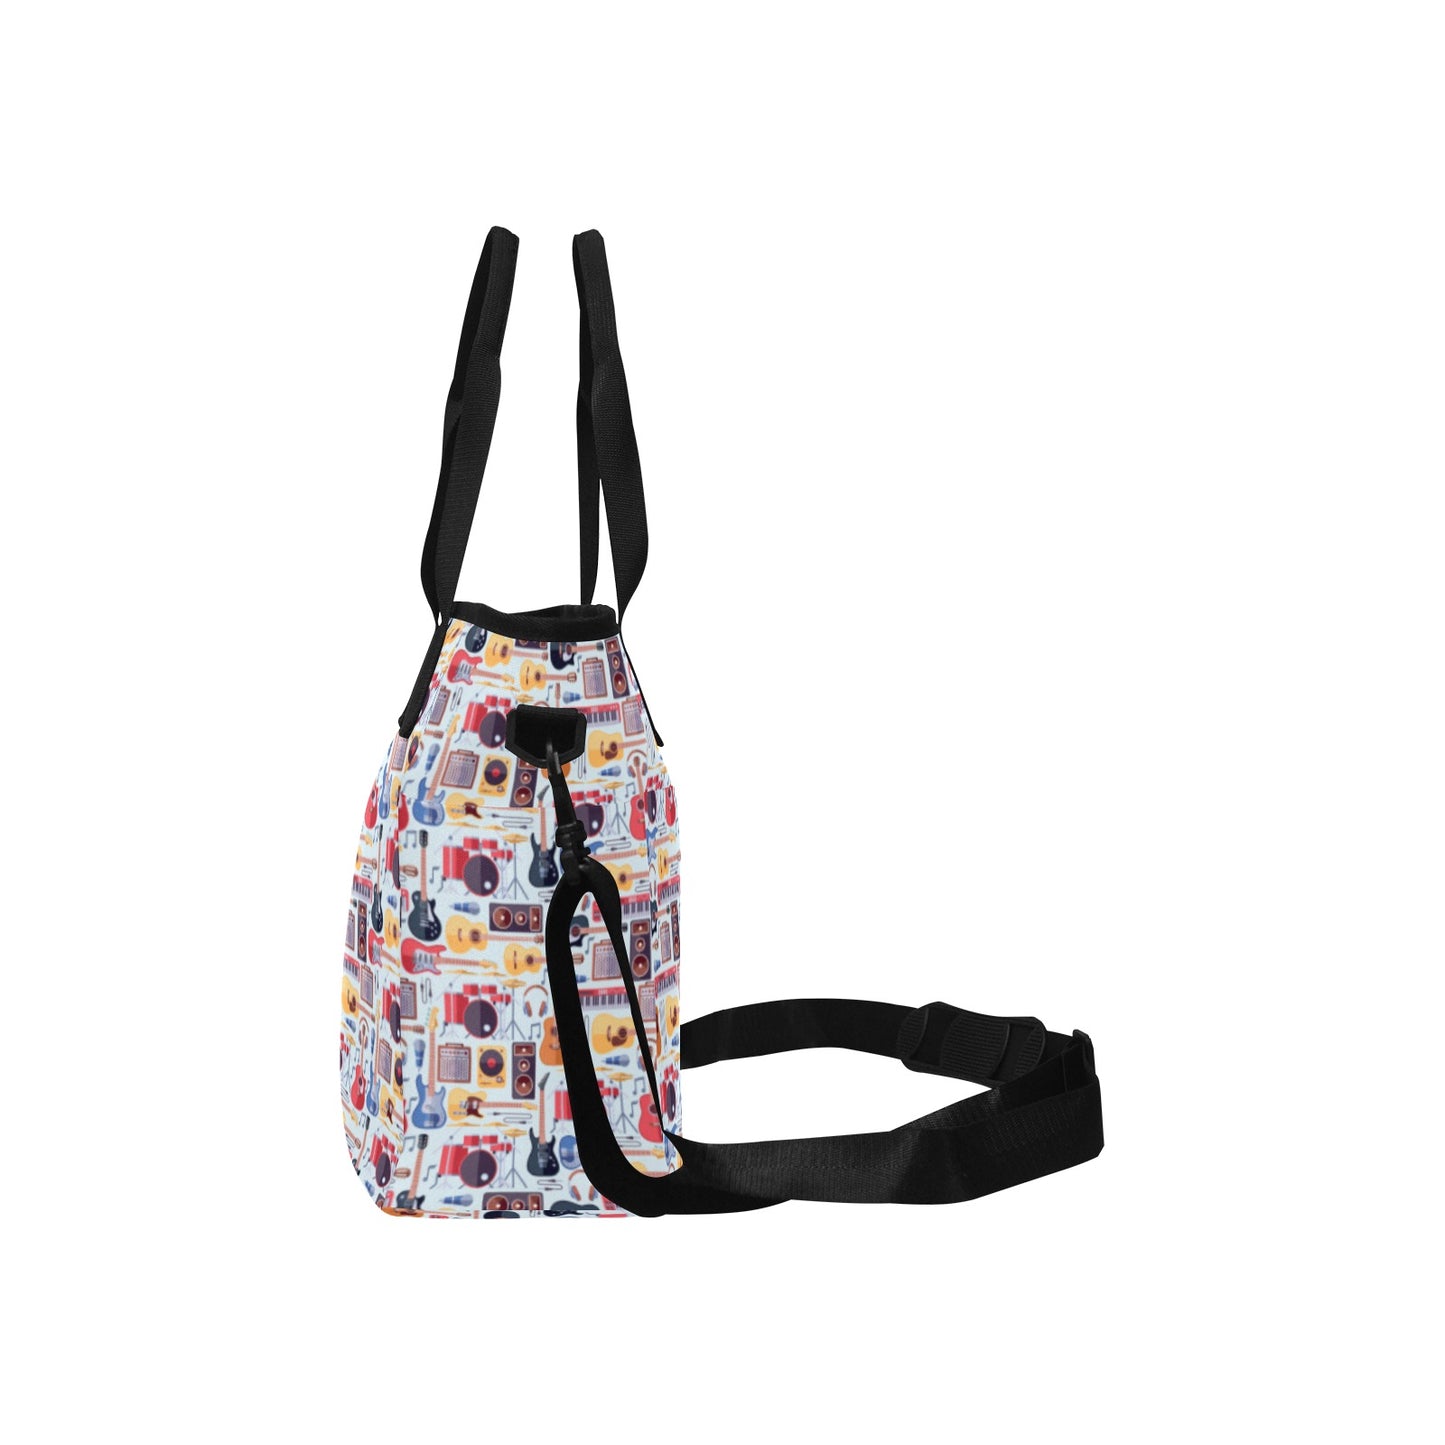 Music Instruments - Tote Bag with Shoulder Strap Nylon Tote Bag